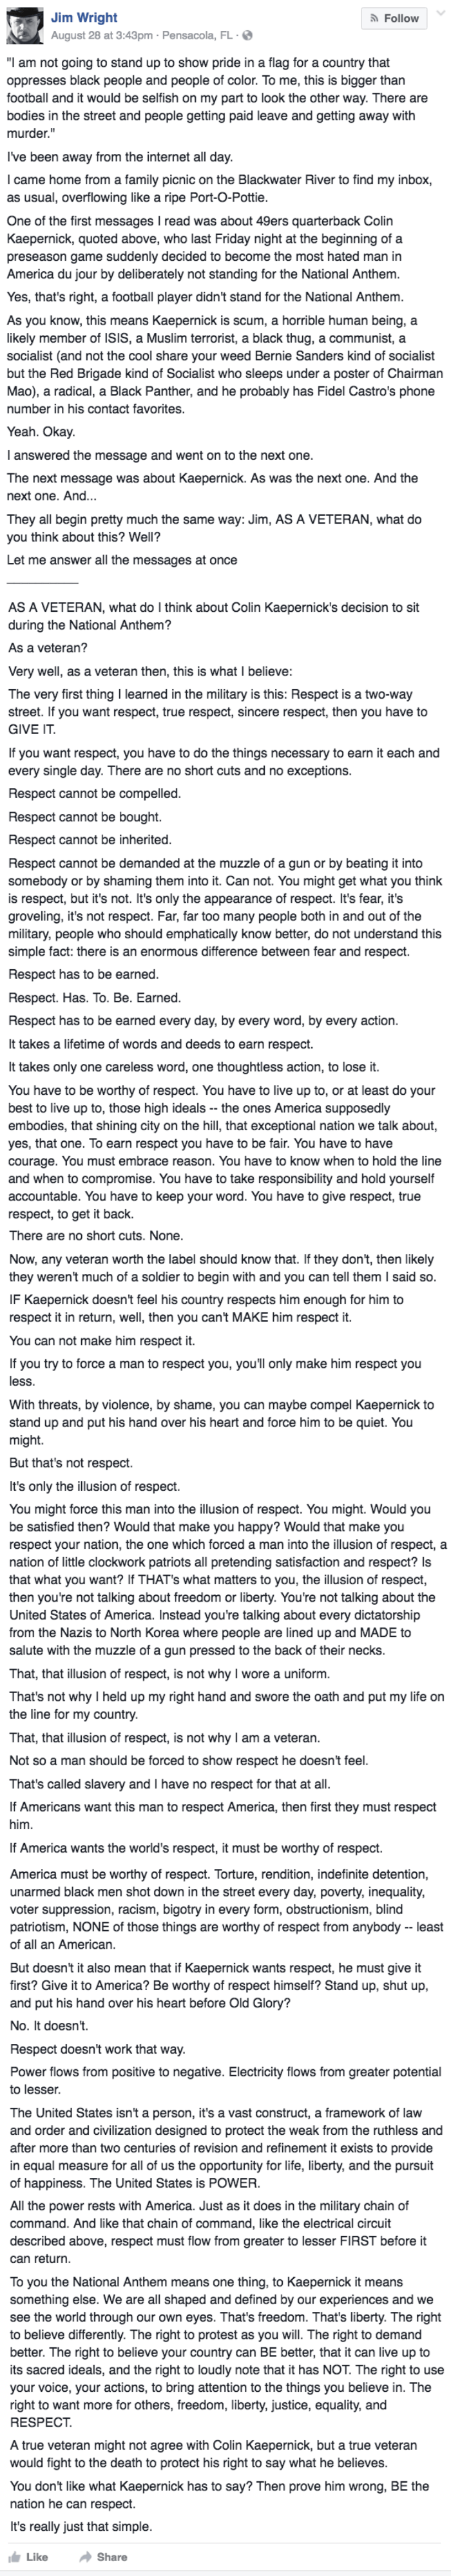 win Veteran Jim Wright responds to Colin Kaepernick's refusal to stand on facebook